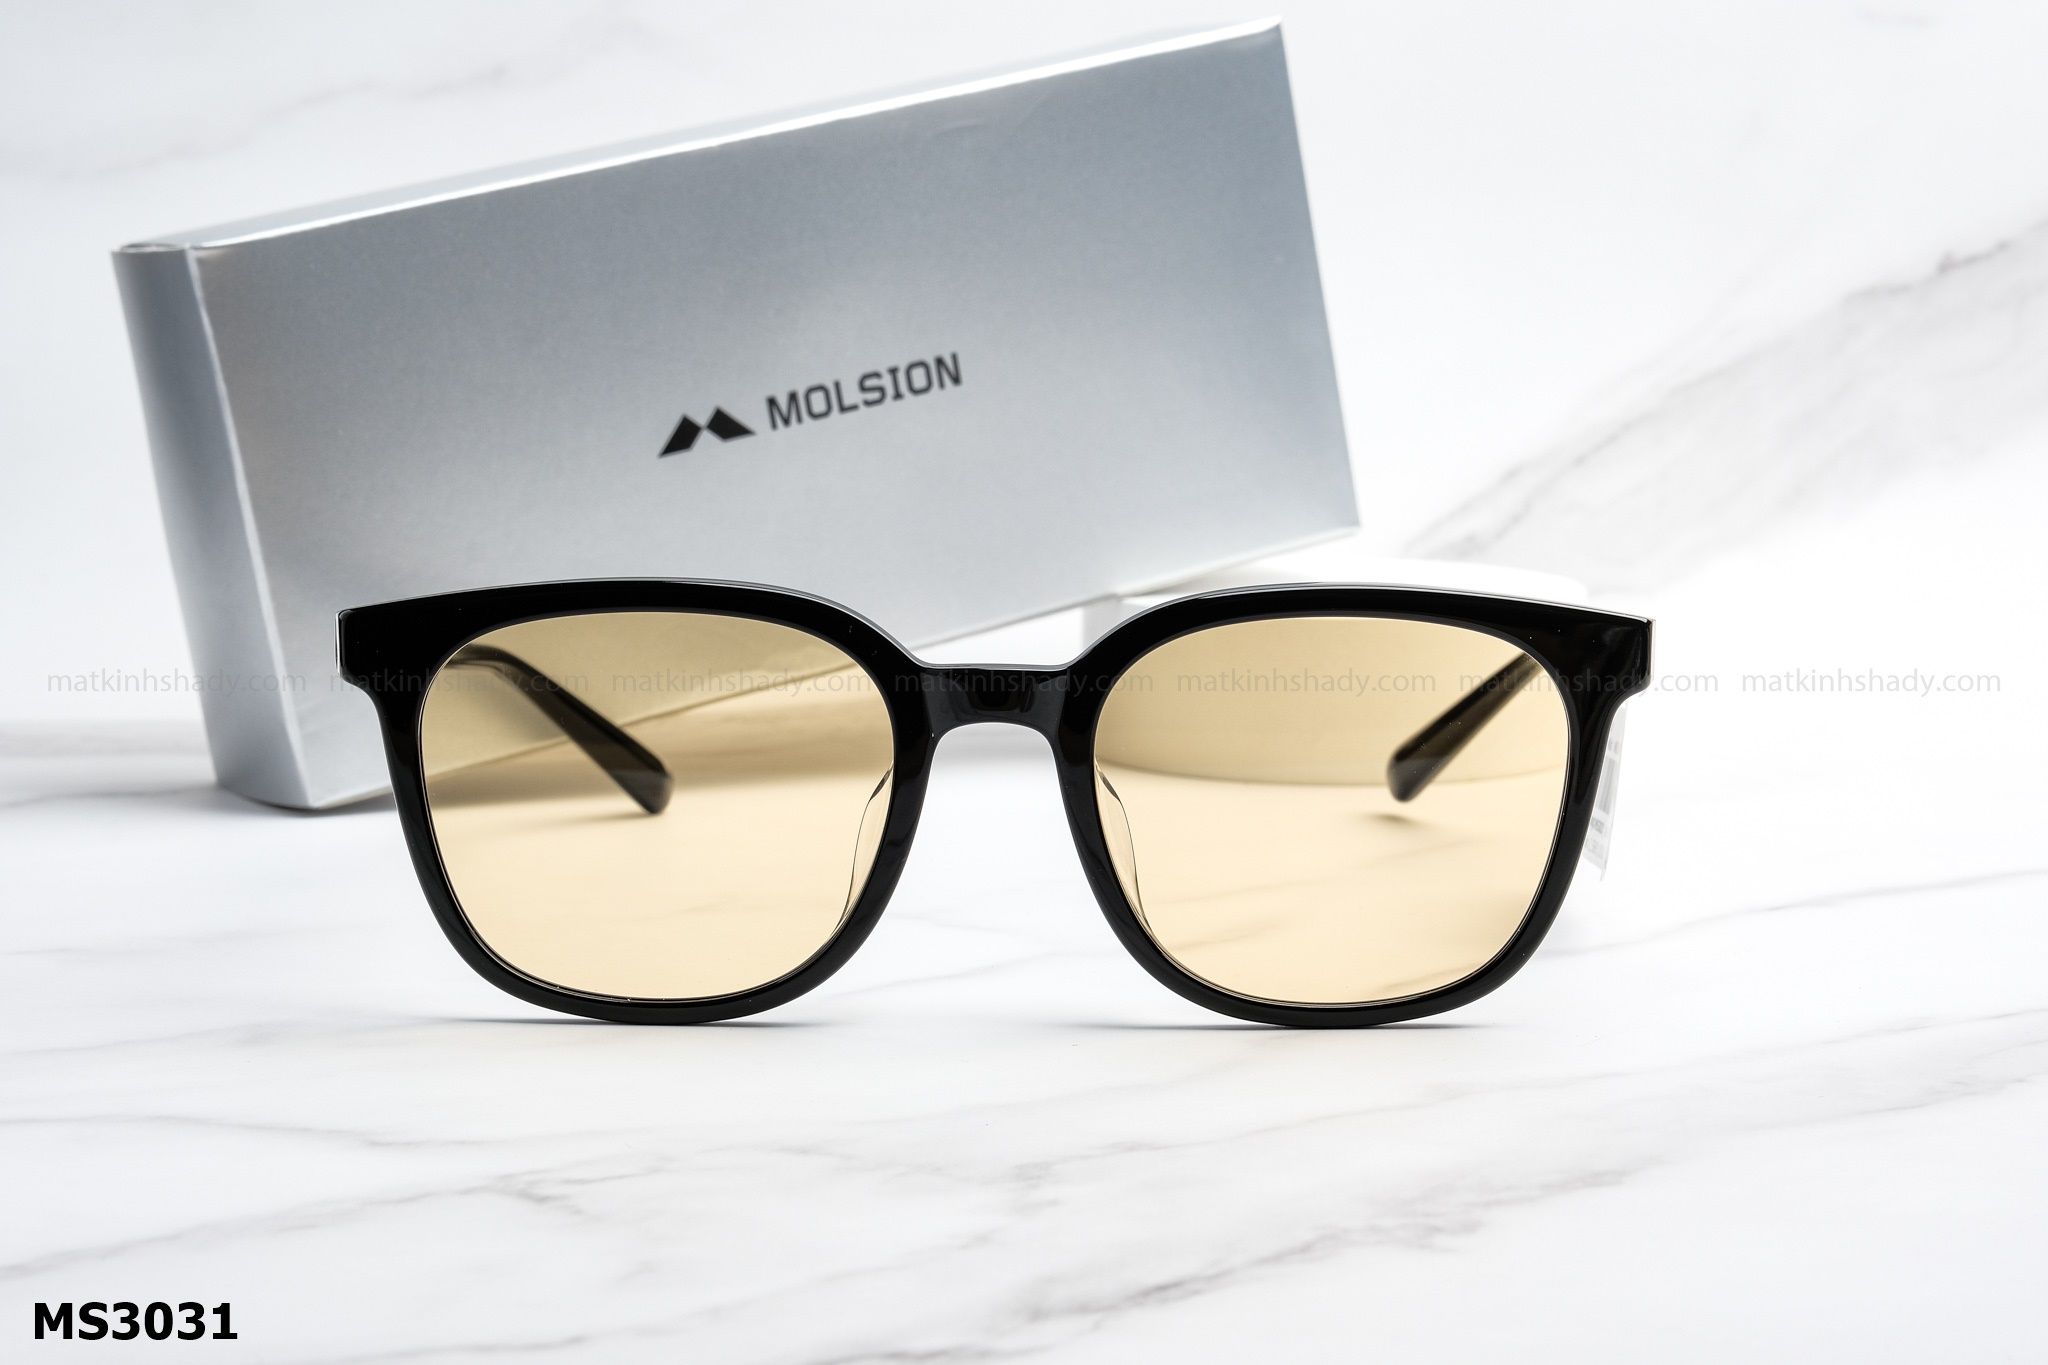  Molsion Eyewear - Sunglasses - MS3031 